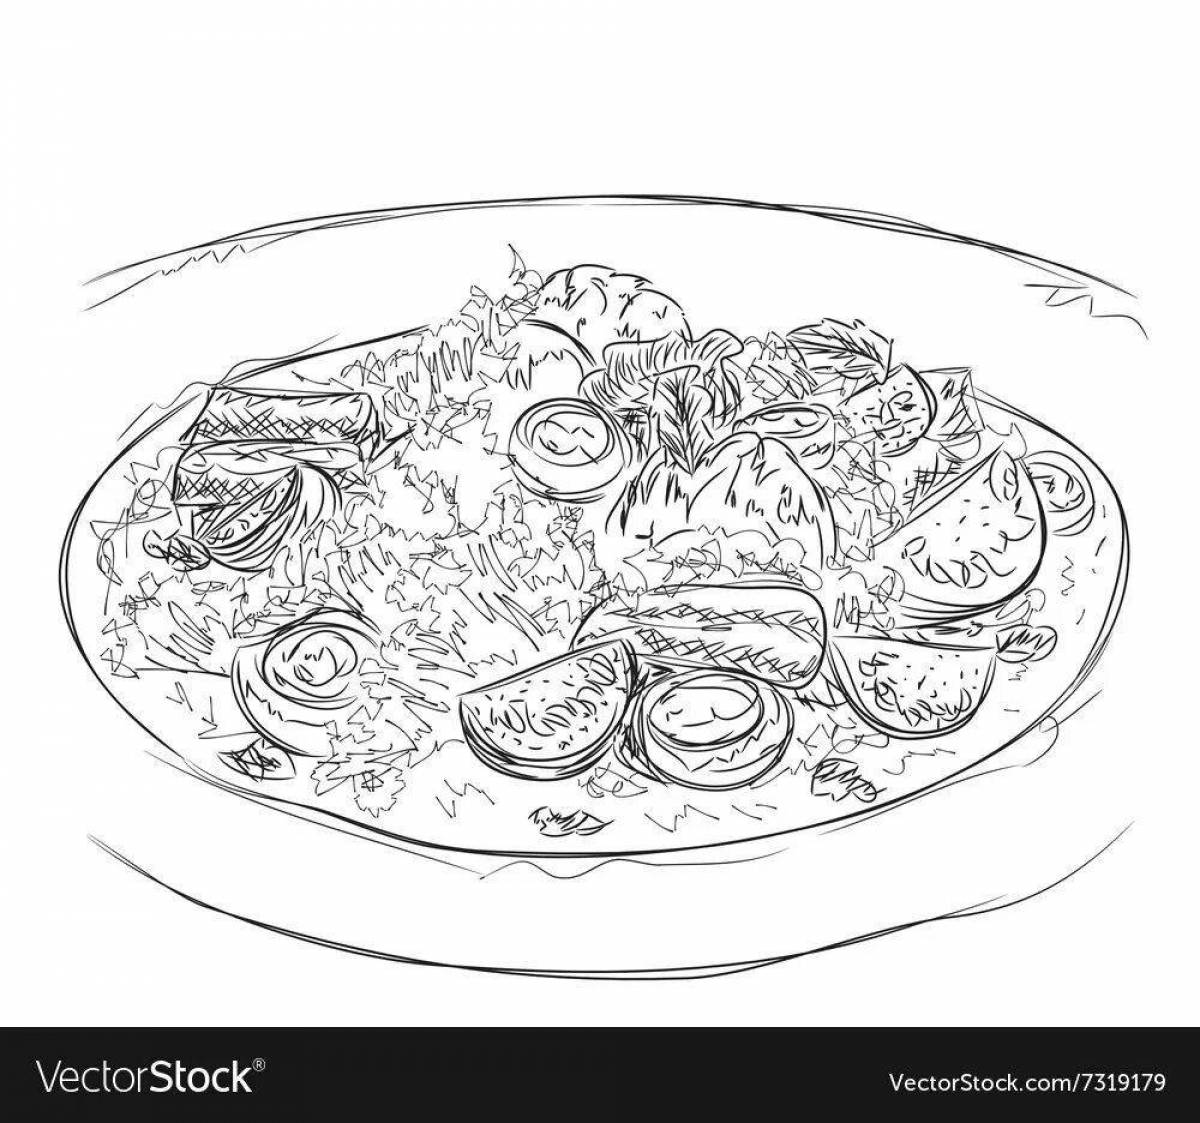 Shrimp salad #9